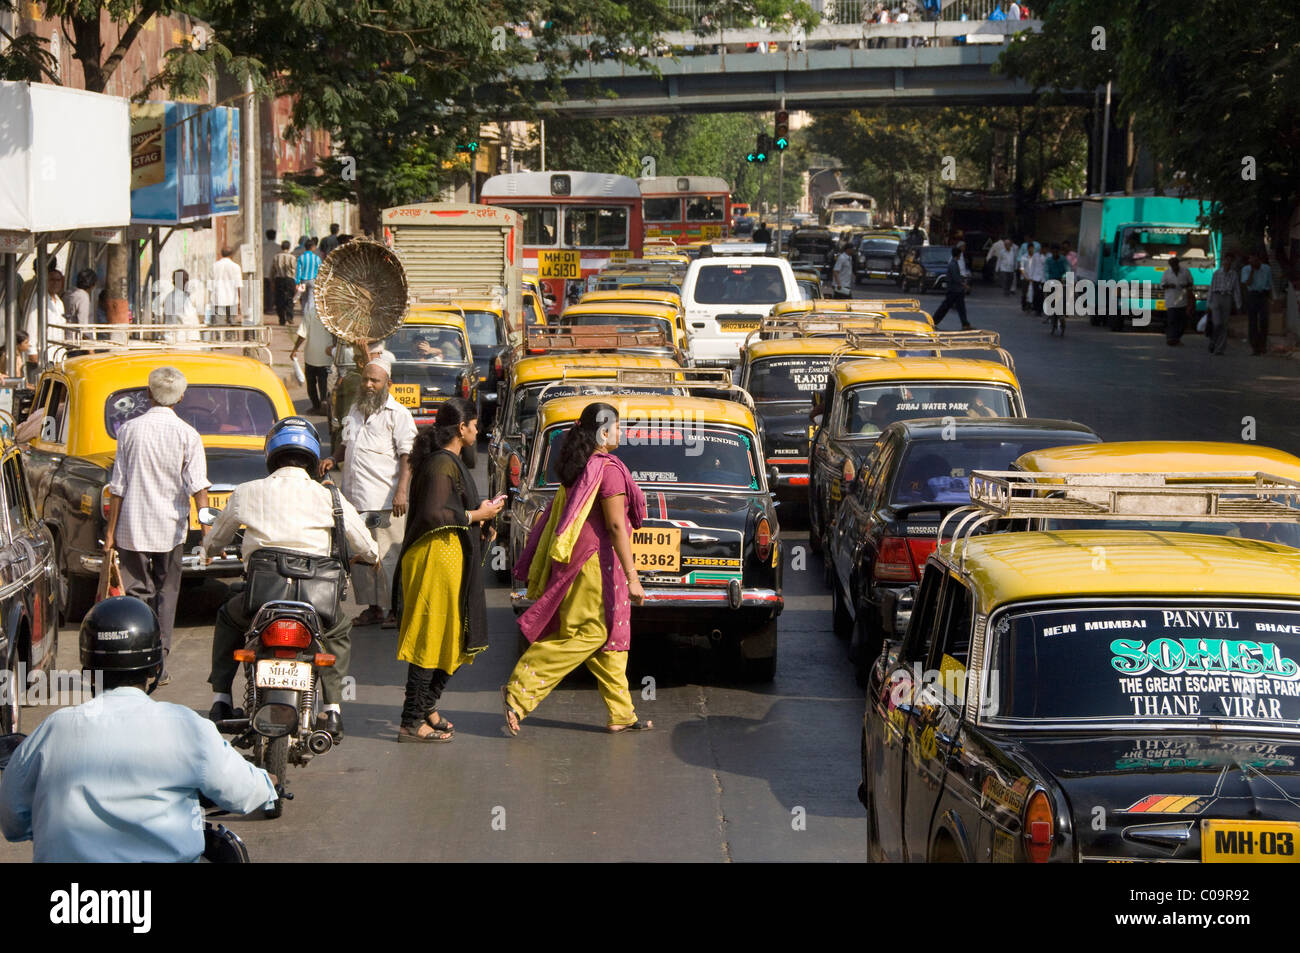 India, state of Maharashtra, Mumbai (aka Bombay). Typical commuter traffic in downtown Mumbai. Stock Photo